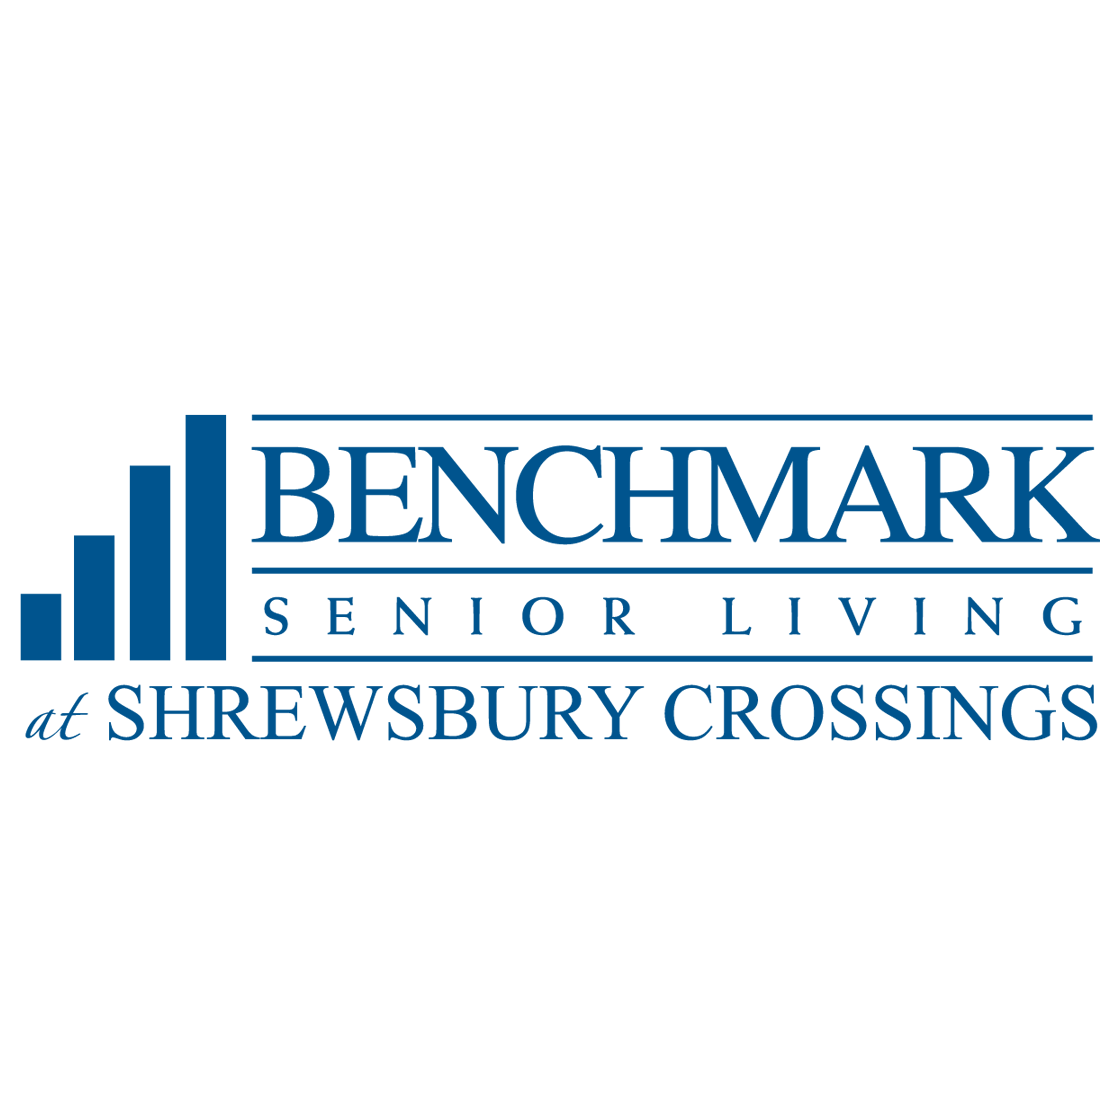 Benchmark Senior Living at Shrewsbury Crossings Logo